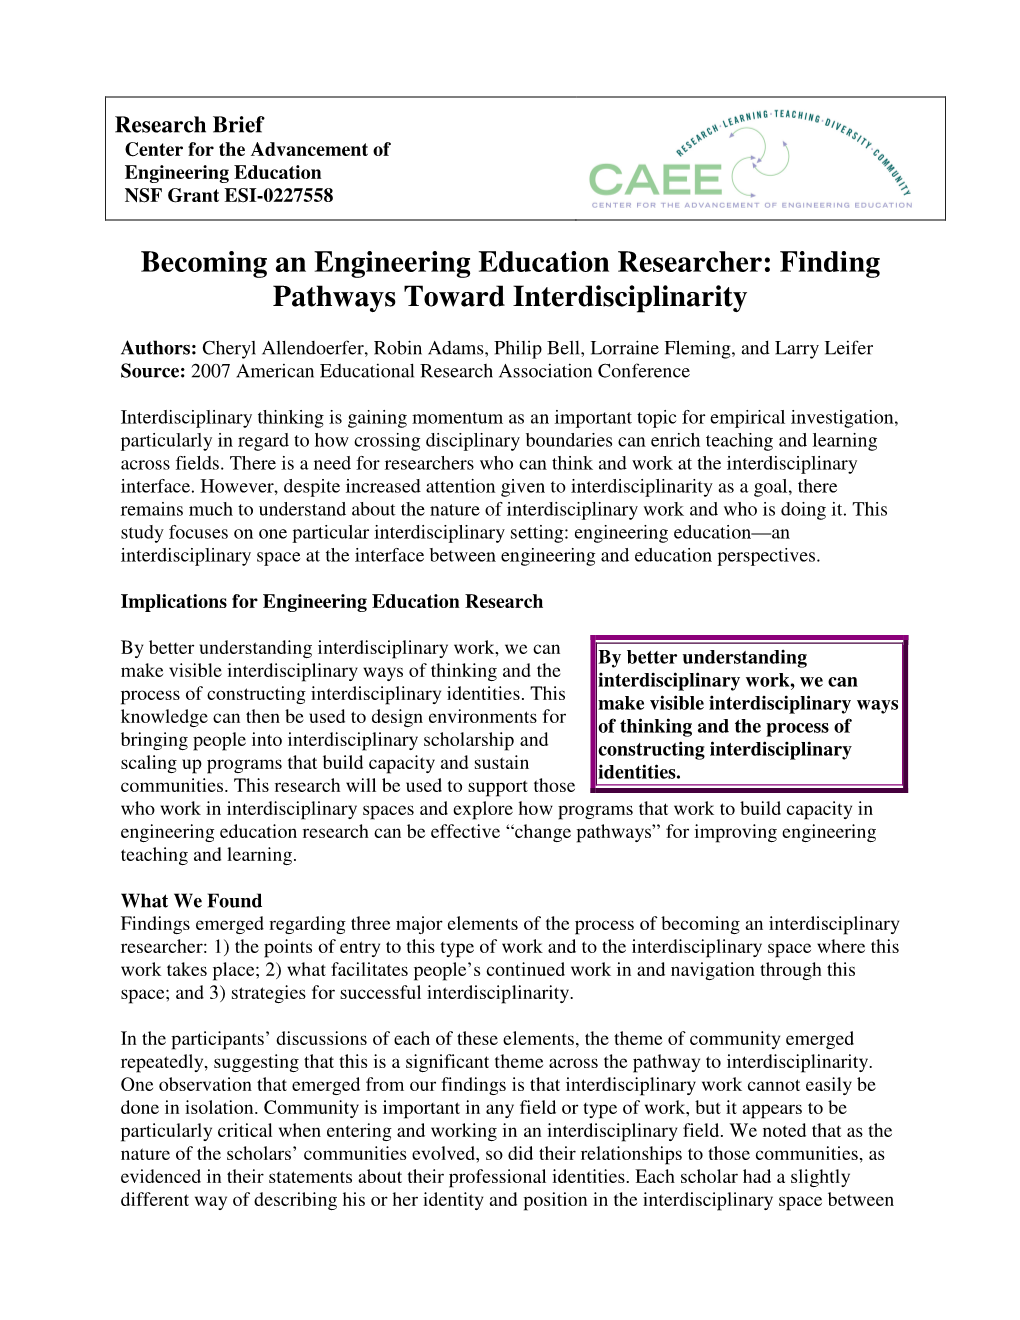 Becoming an Engineering Education Researcher: Finding Pathways Toward Interdisciplinarity